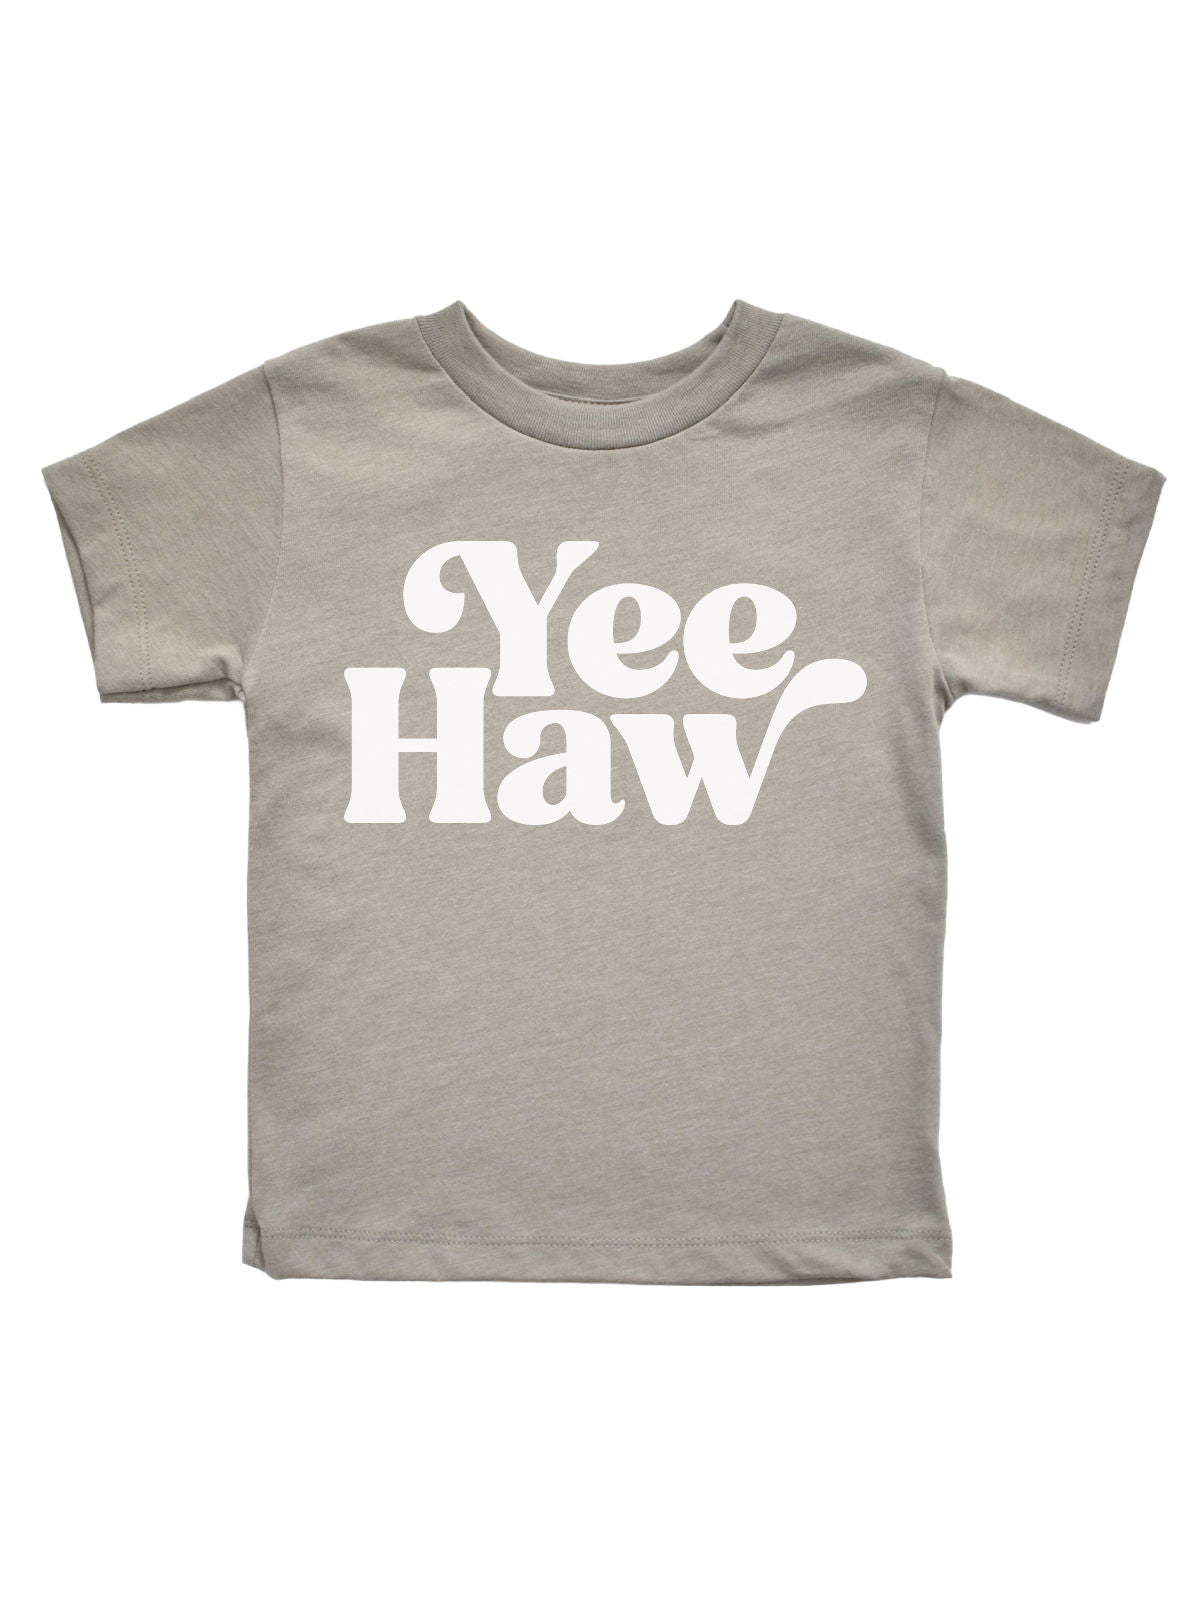 Yee Haw Kids Country Shirt in Stone